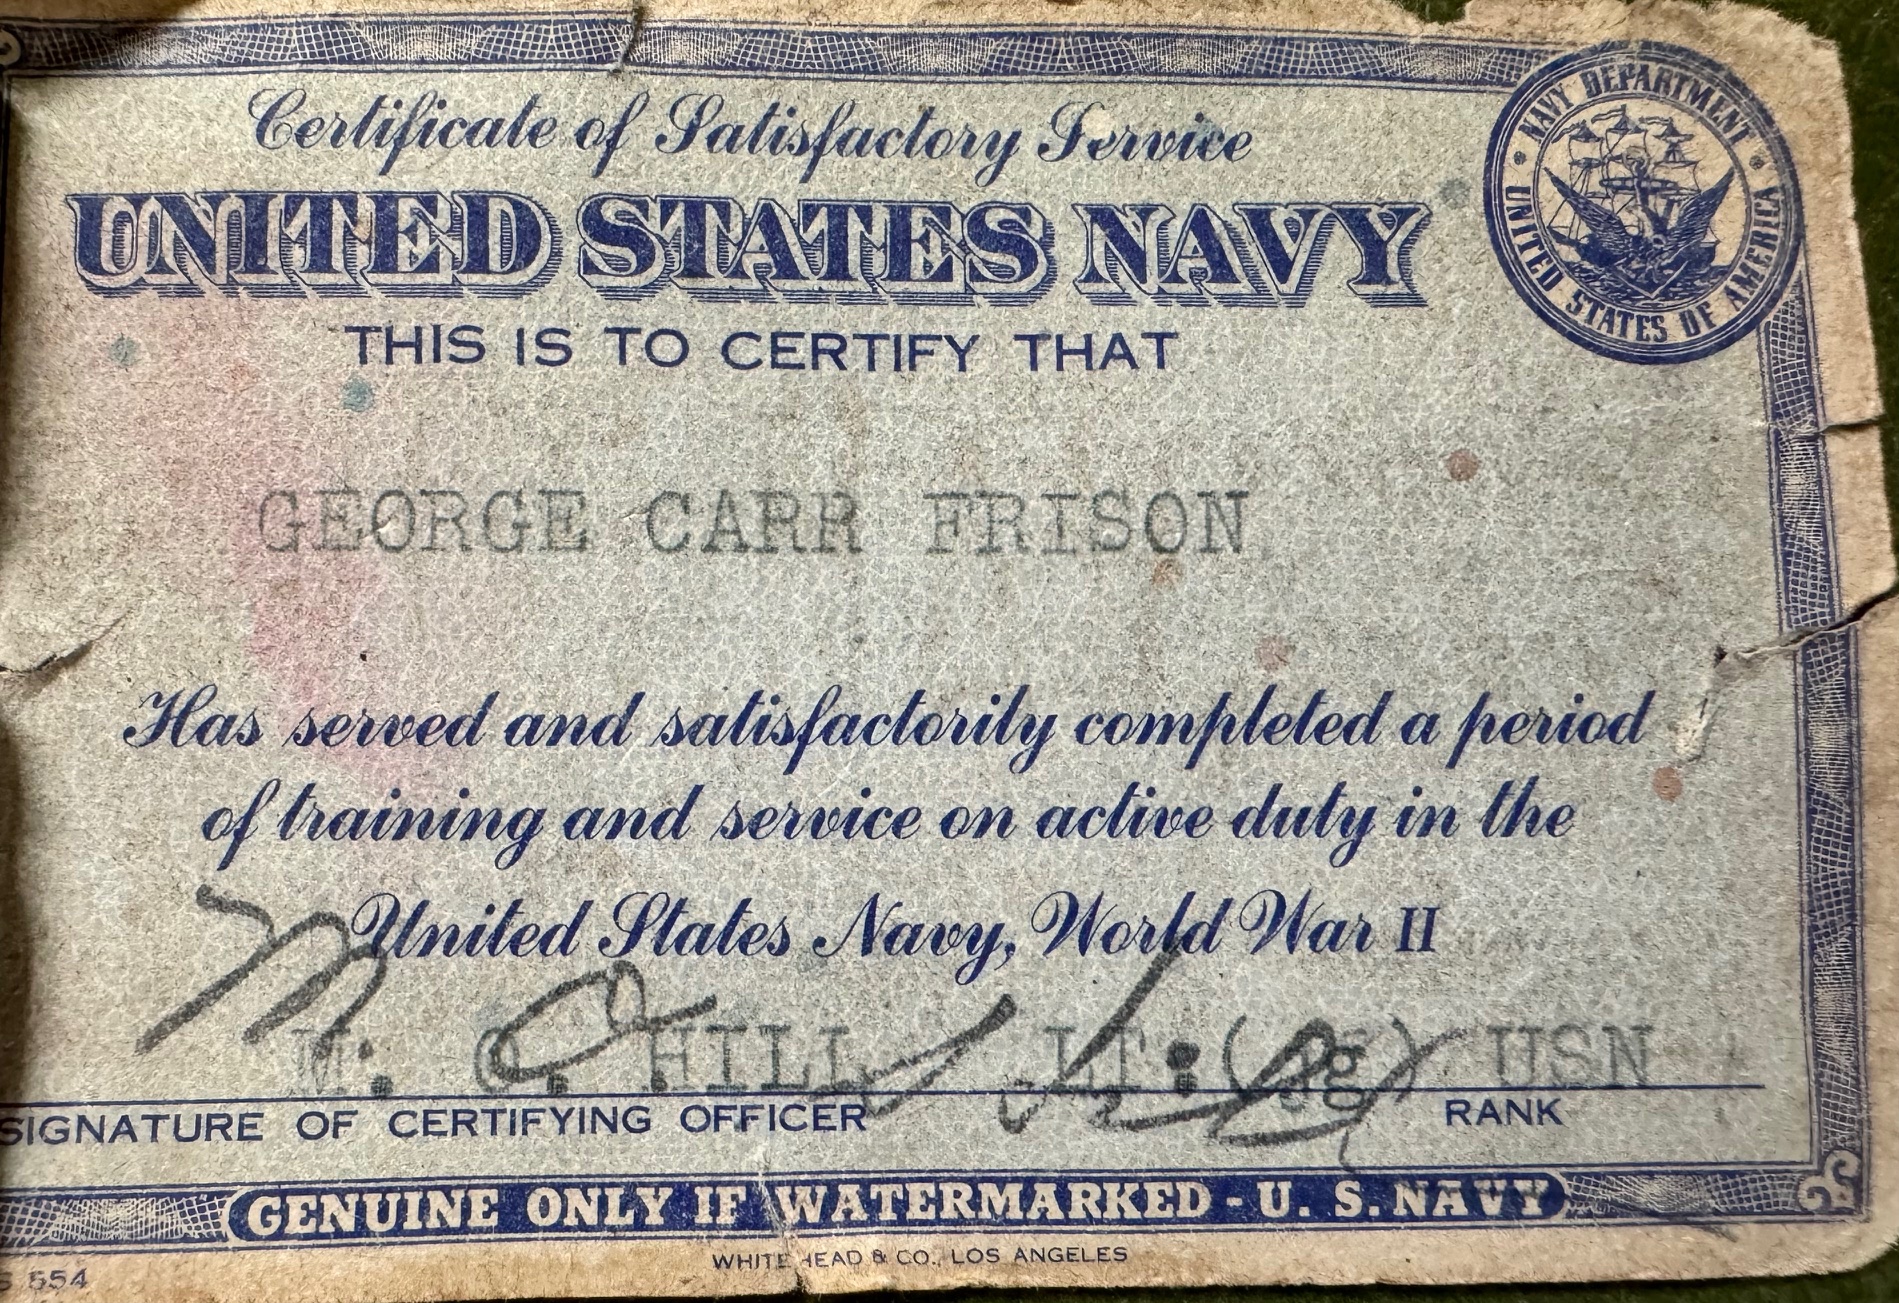 Navy service card